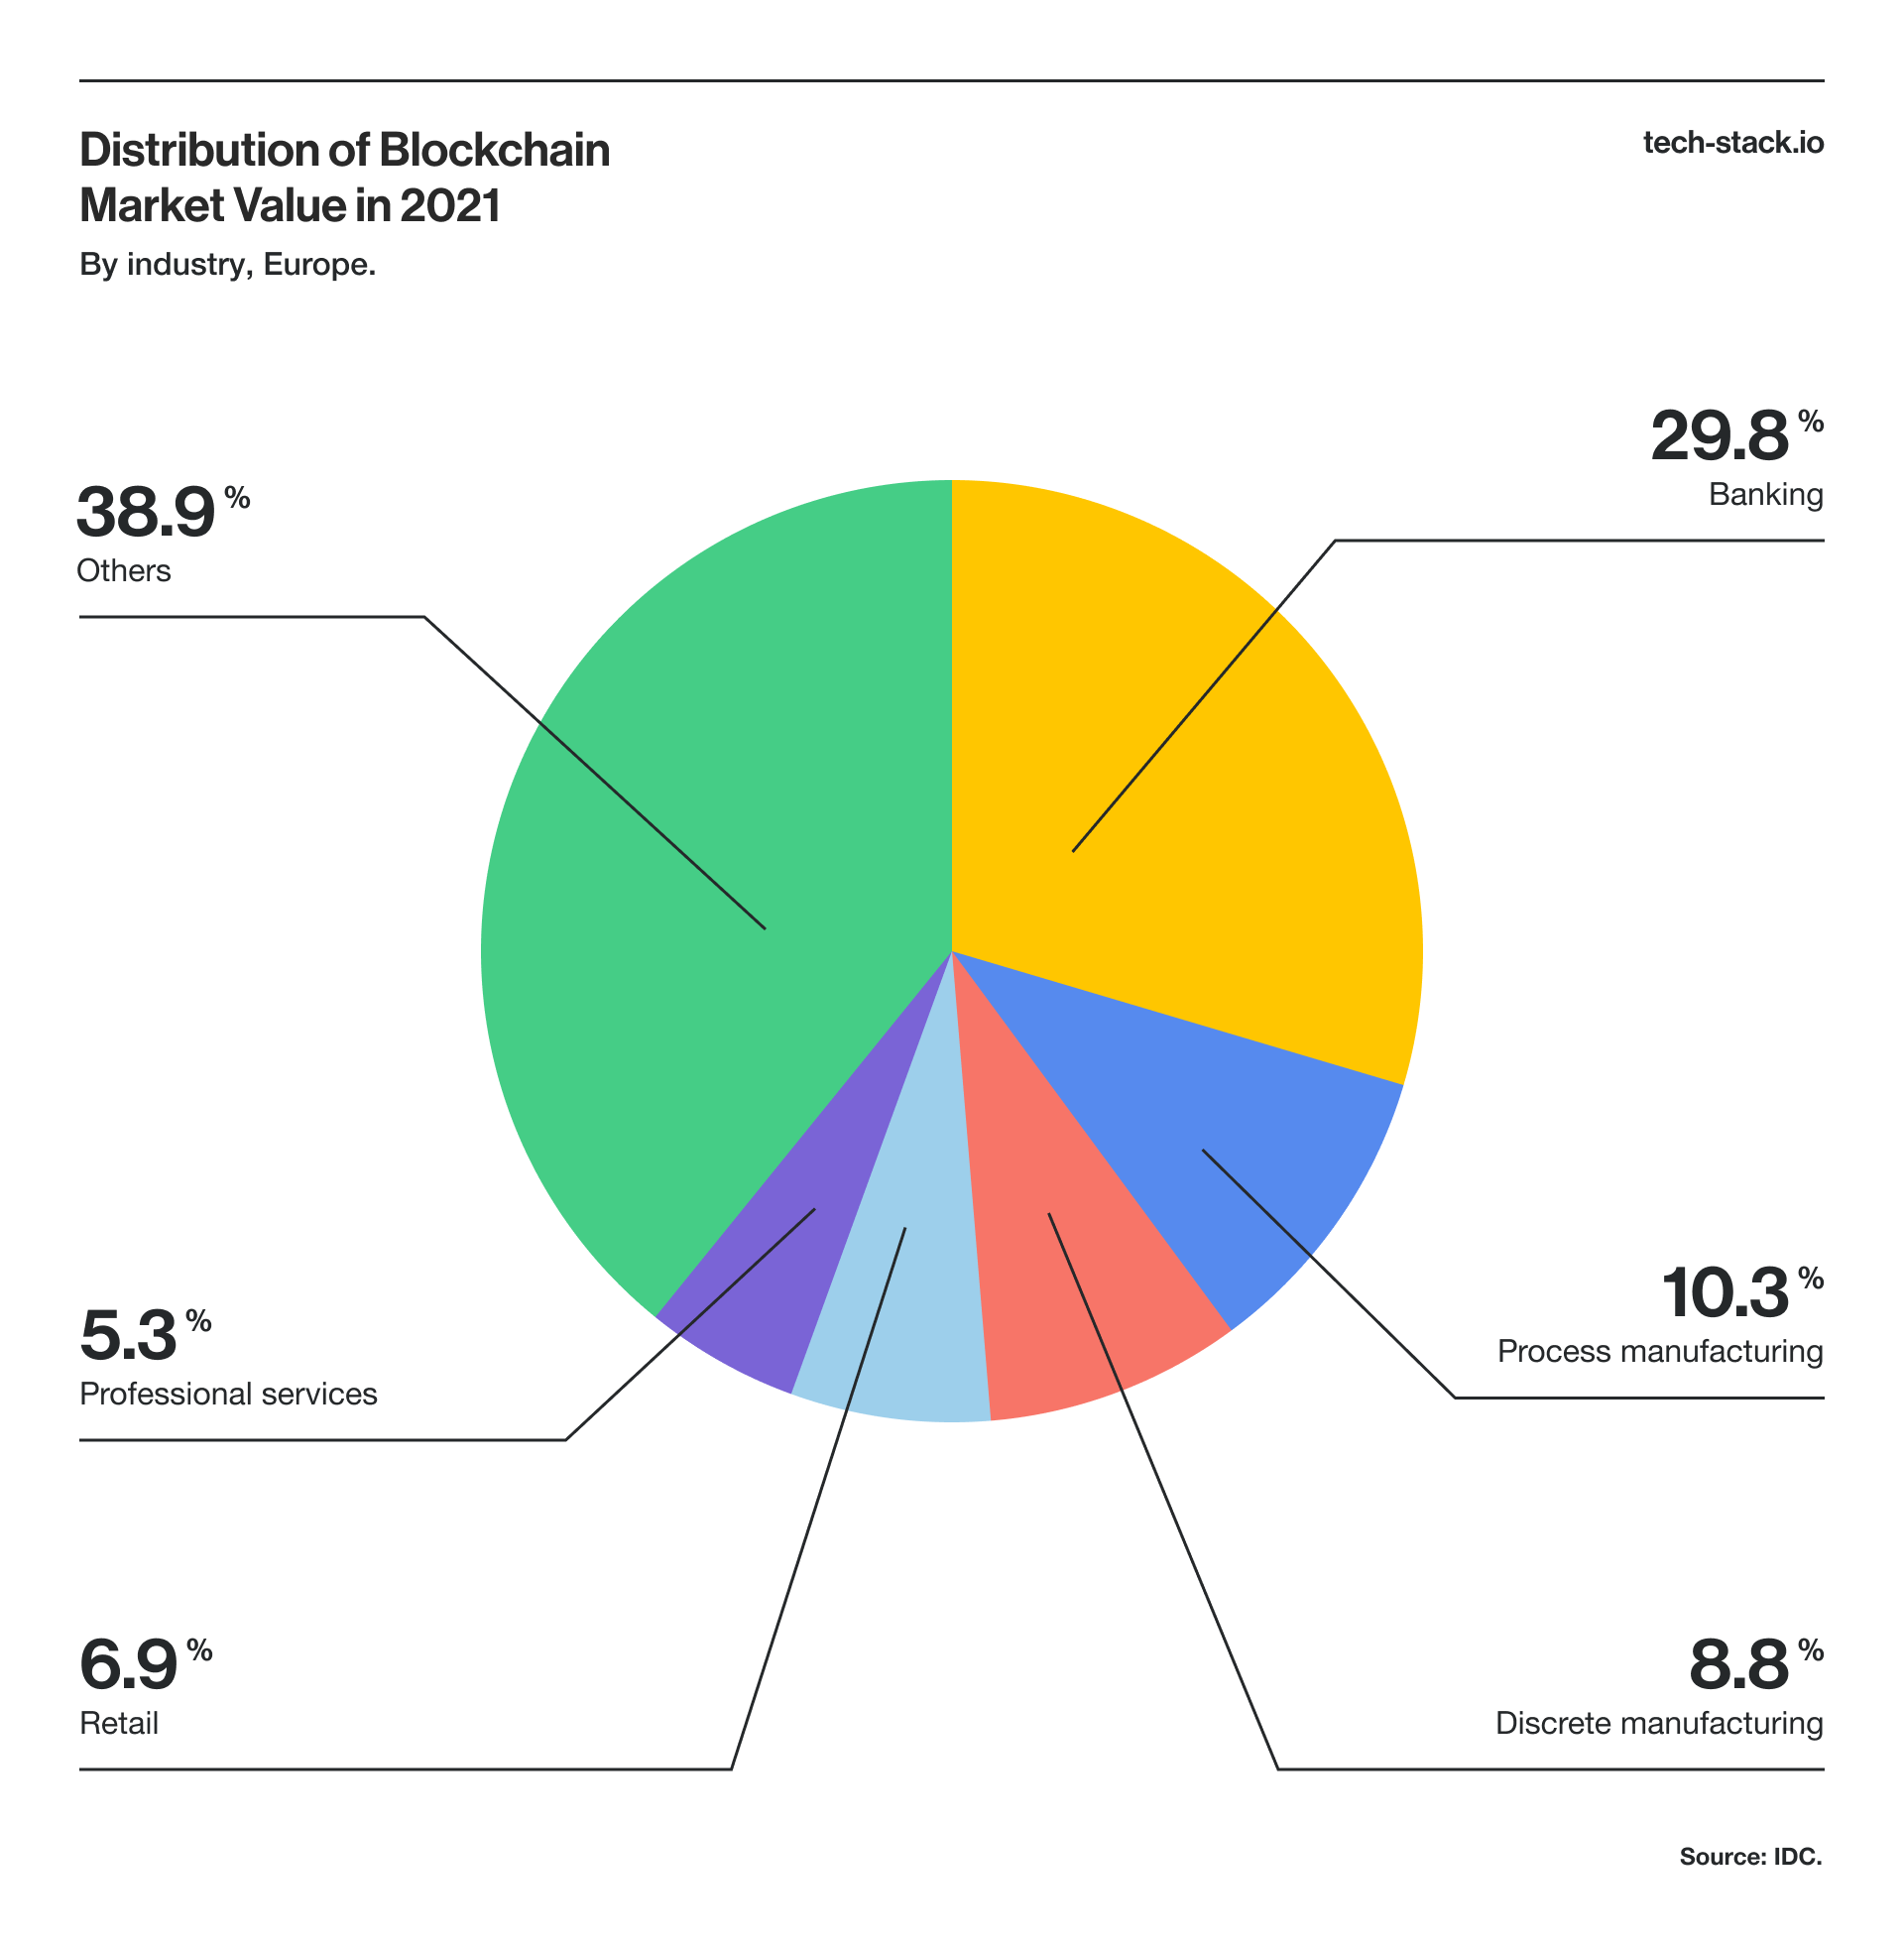 Distribution of Blockchain Market Value in 2021